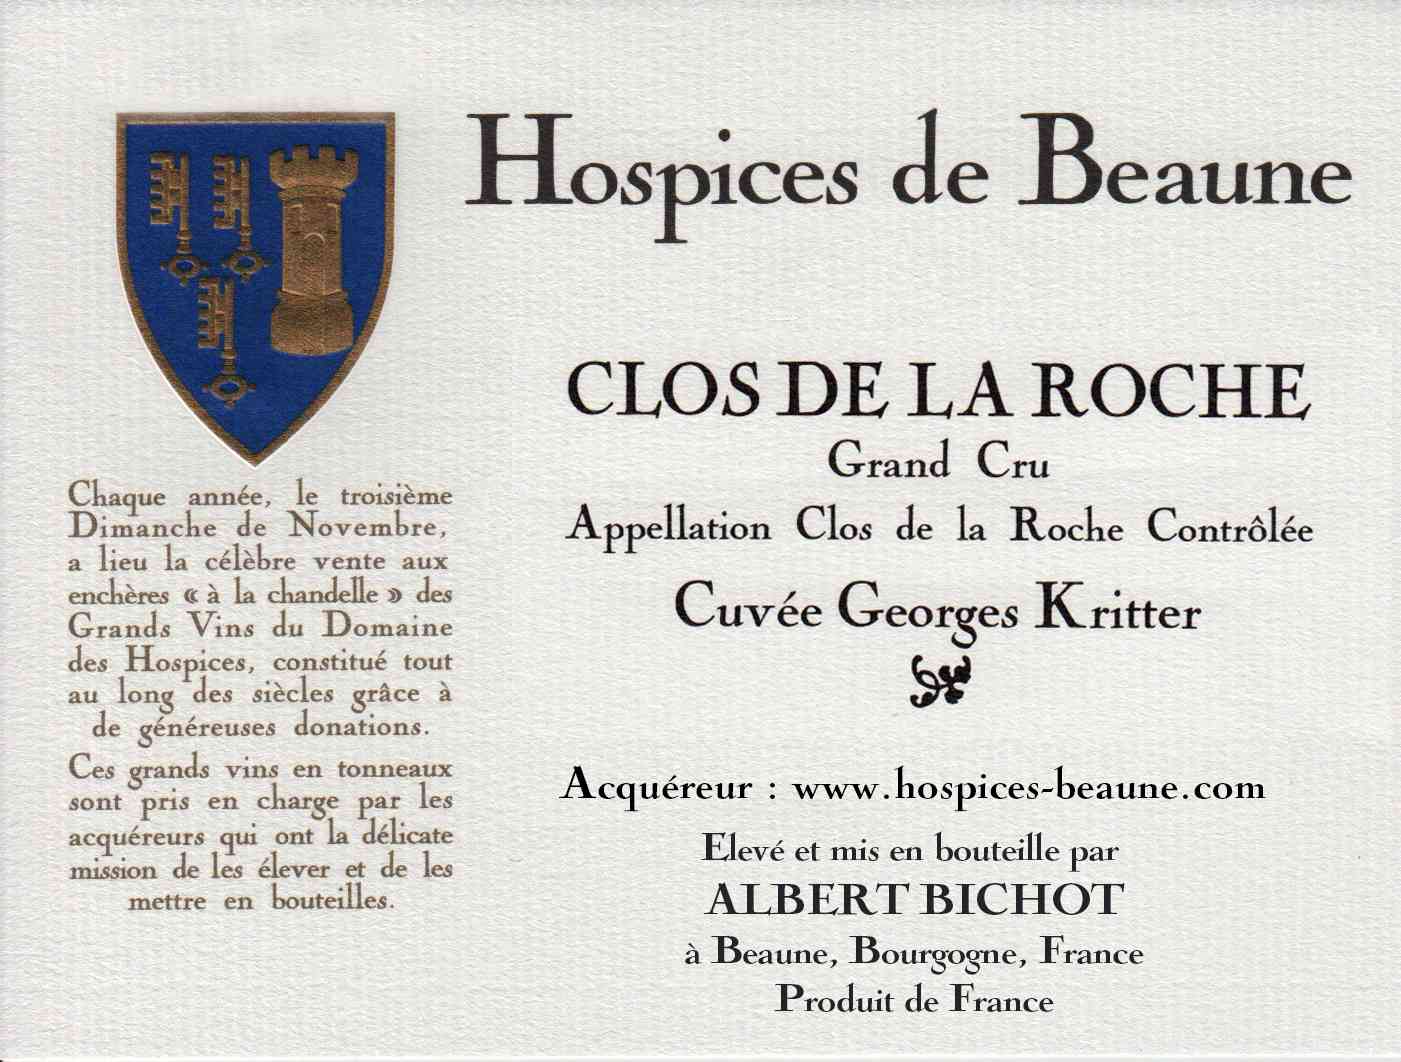 Encheres-auction-HospicesdeBeaune-AlbertBichot-ClosdelaRoche-grandcru-Cuvee-GeorgesKriter